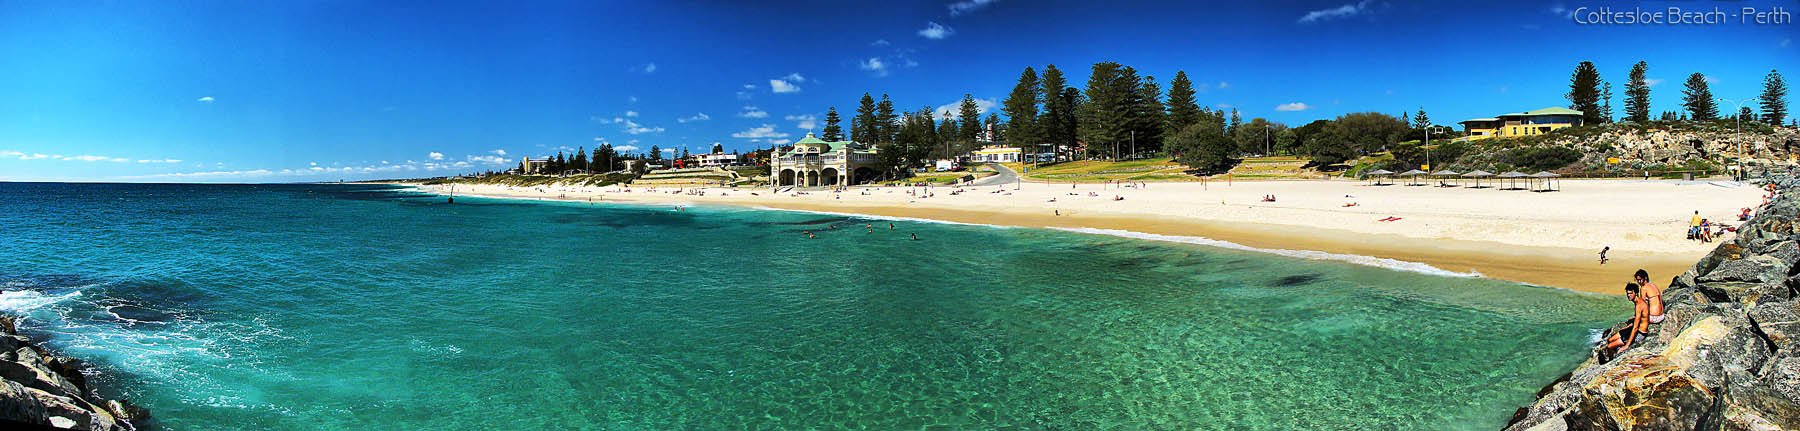 Cottosloe Beach-Perth.jpg